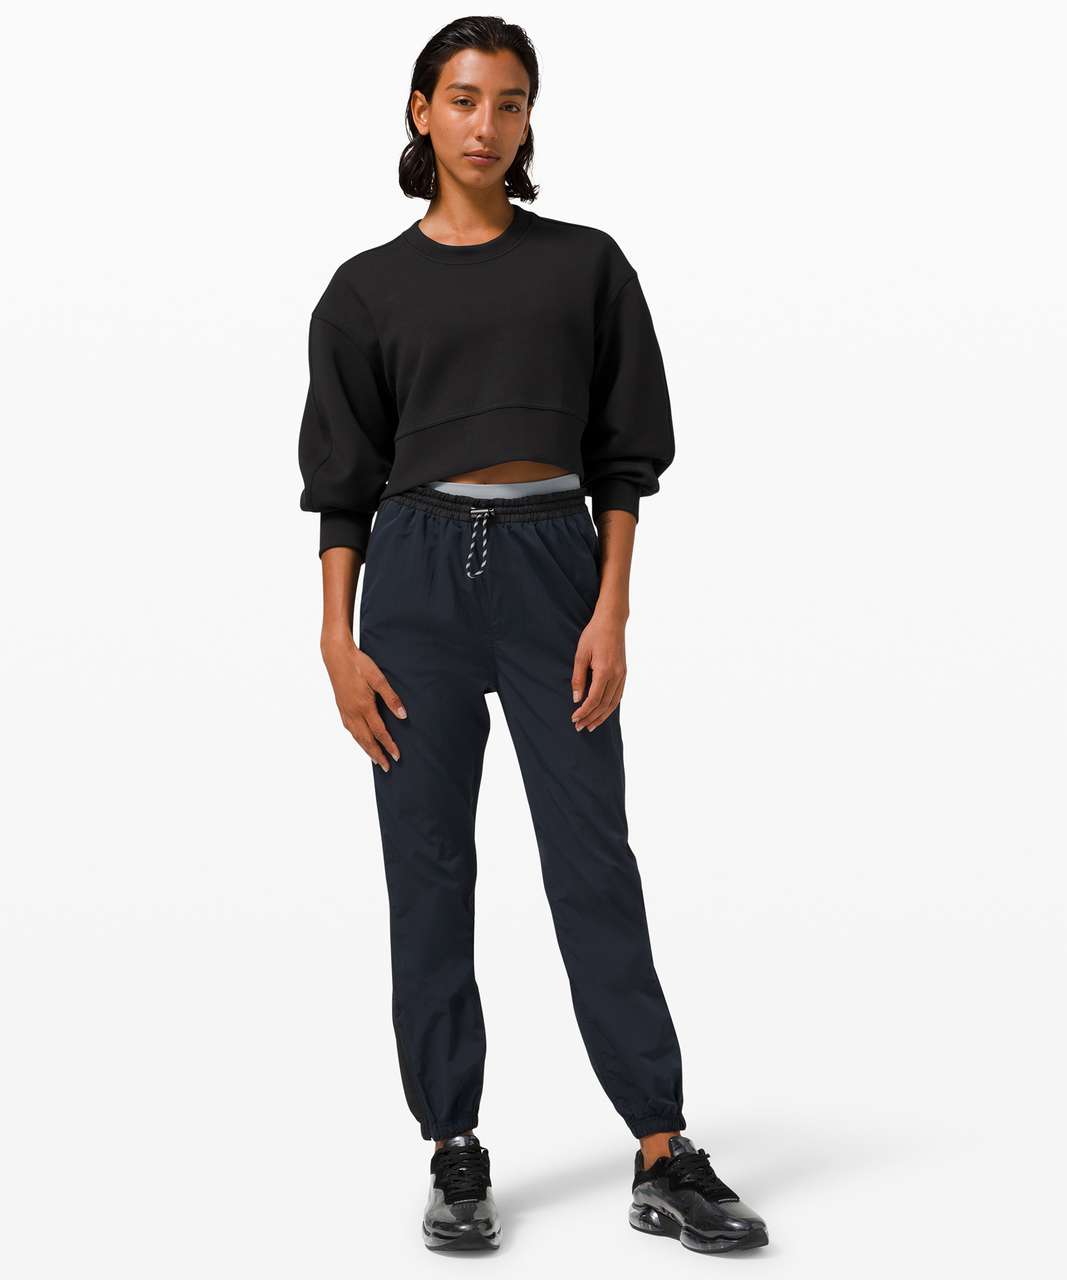 Lululemon black track pants women’s size 6